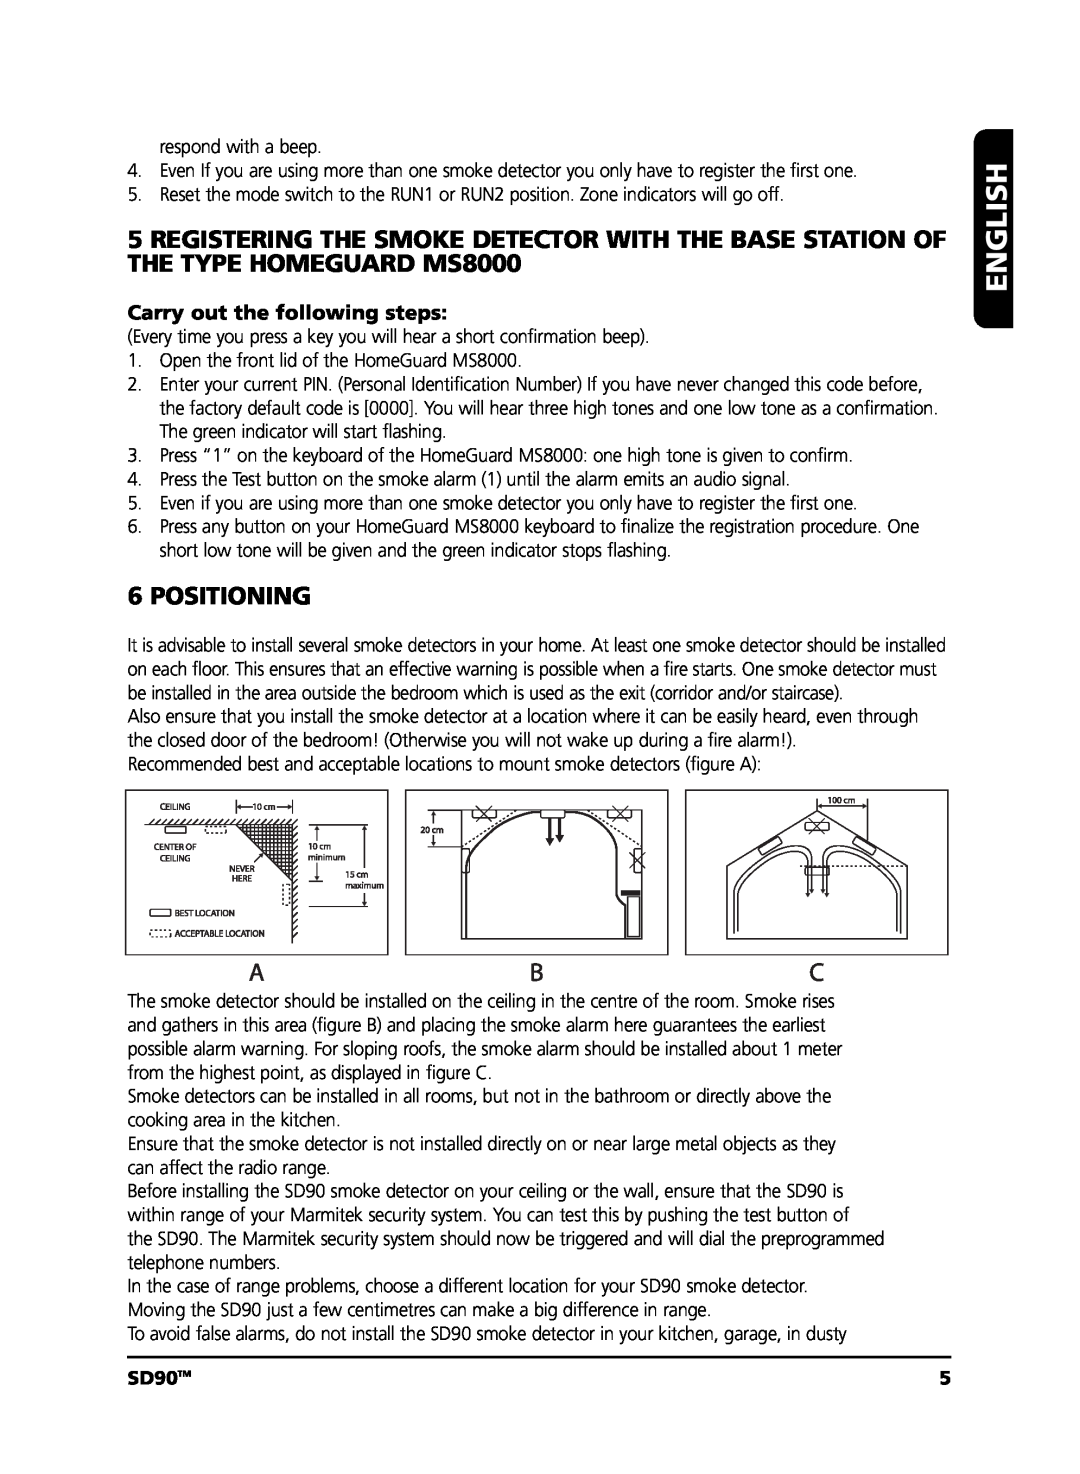 Marmitek user manual Positioning, English, SD90TM 